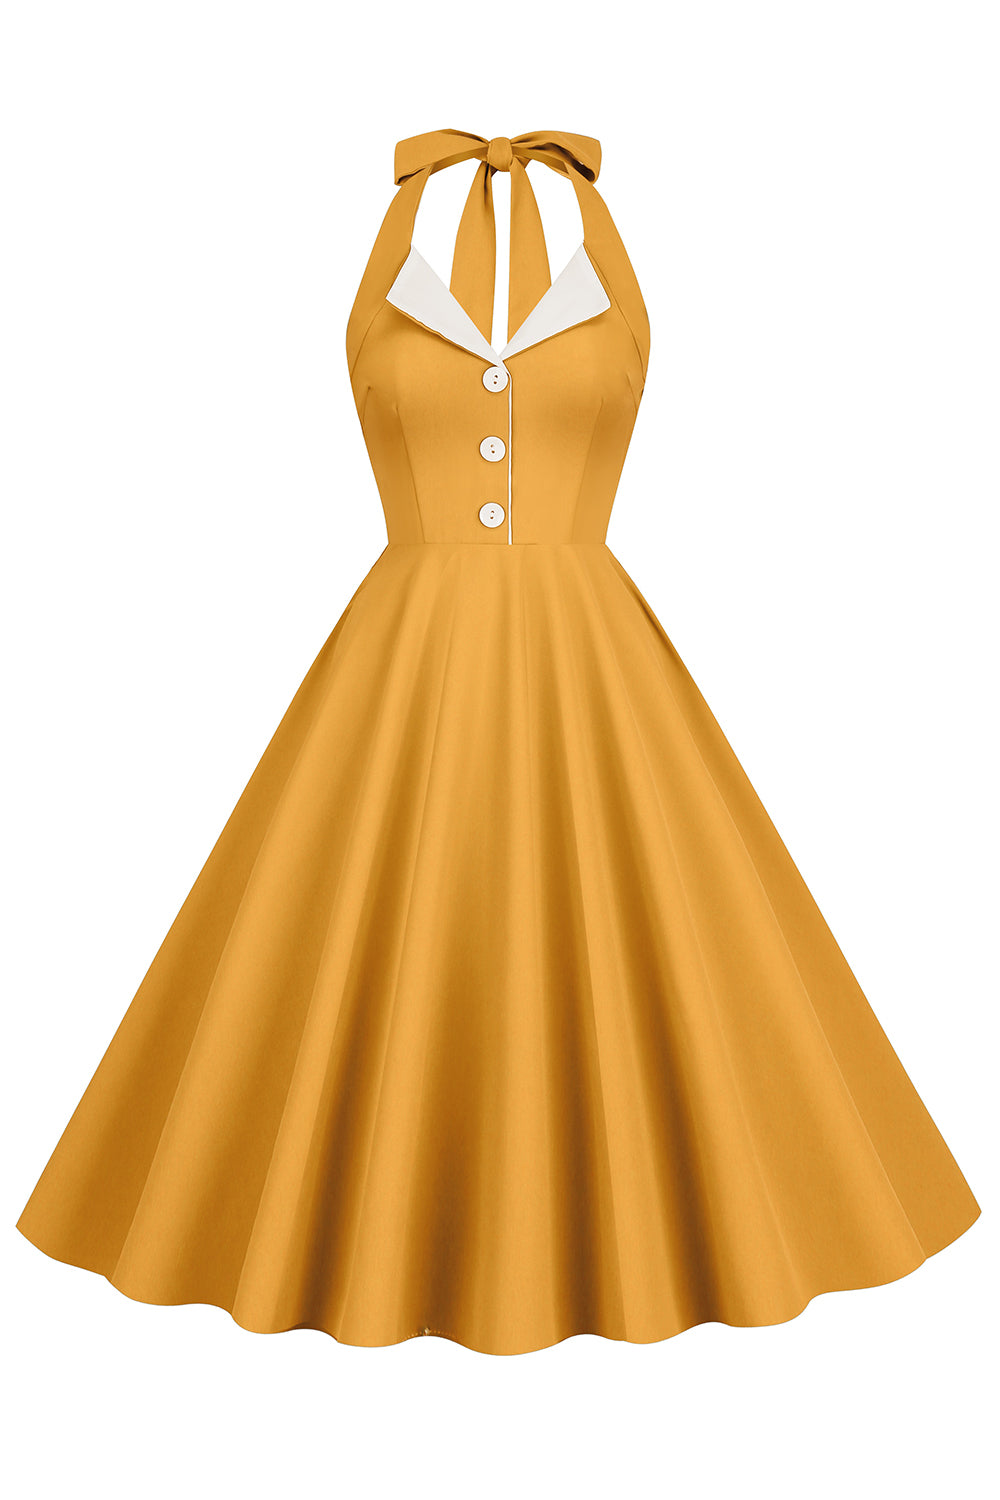 Hepburn Style Halter Neck Blue 1950s Dress